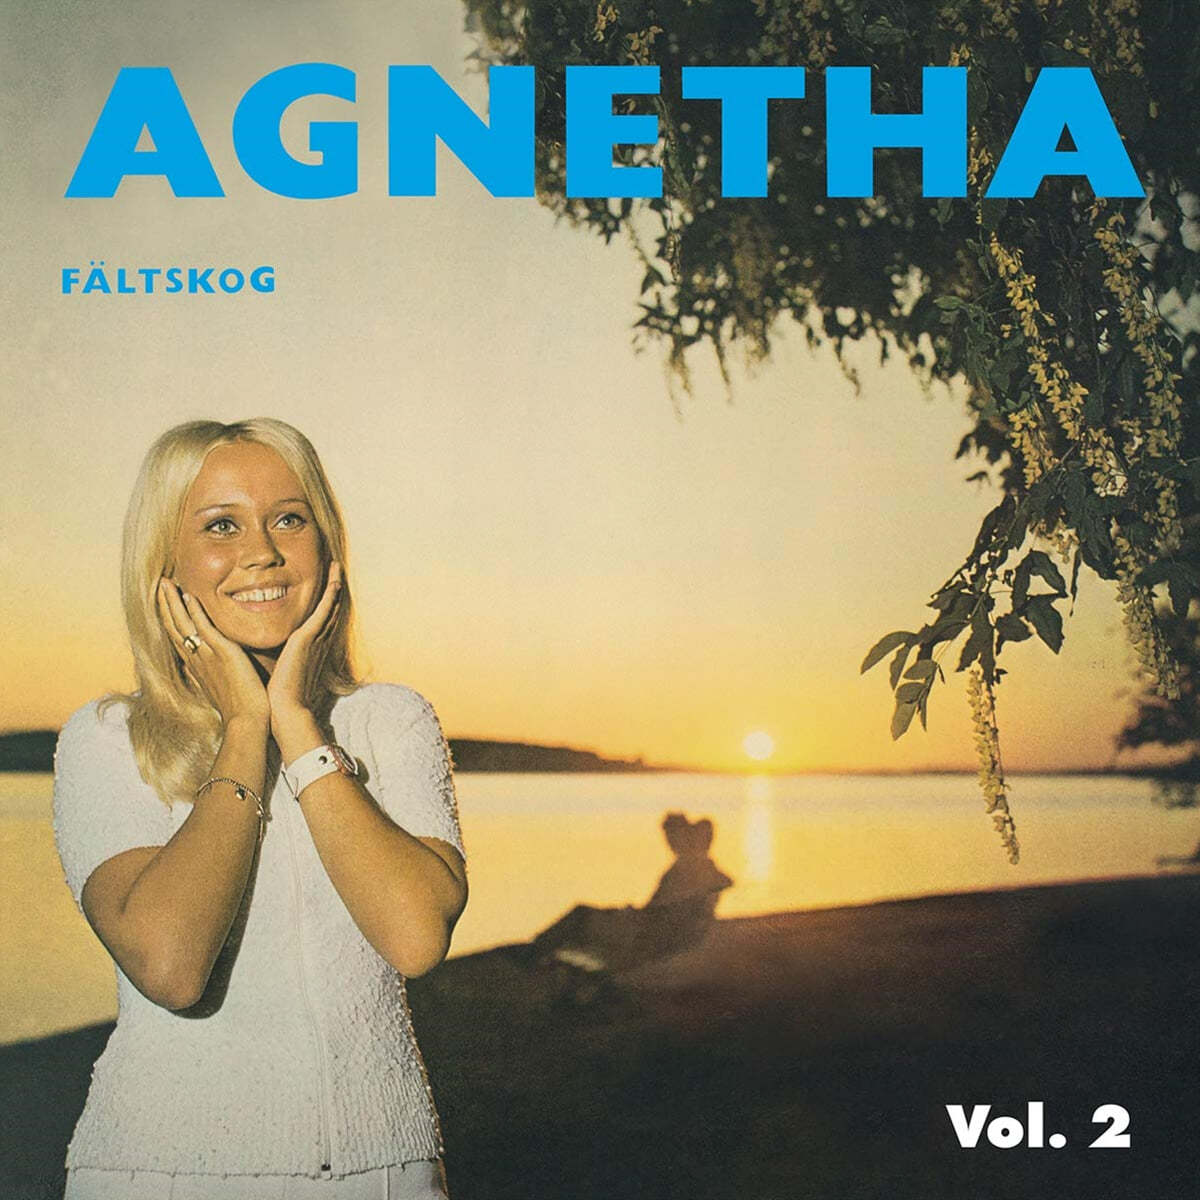 Agnetha Faltskog (아그네사 팰츠콕) - Agnetha Faltskog Vol. 2 [블루 마블 컬러 LP] 